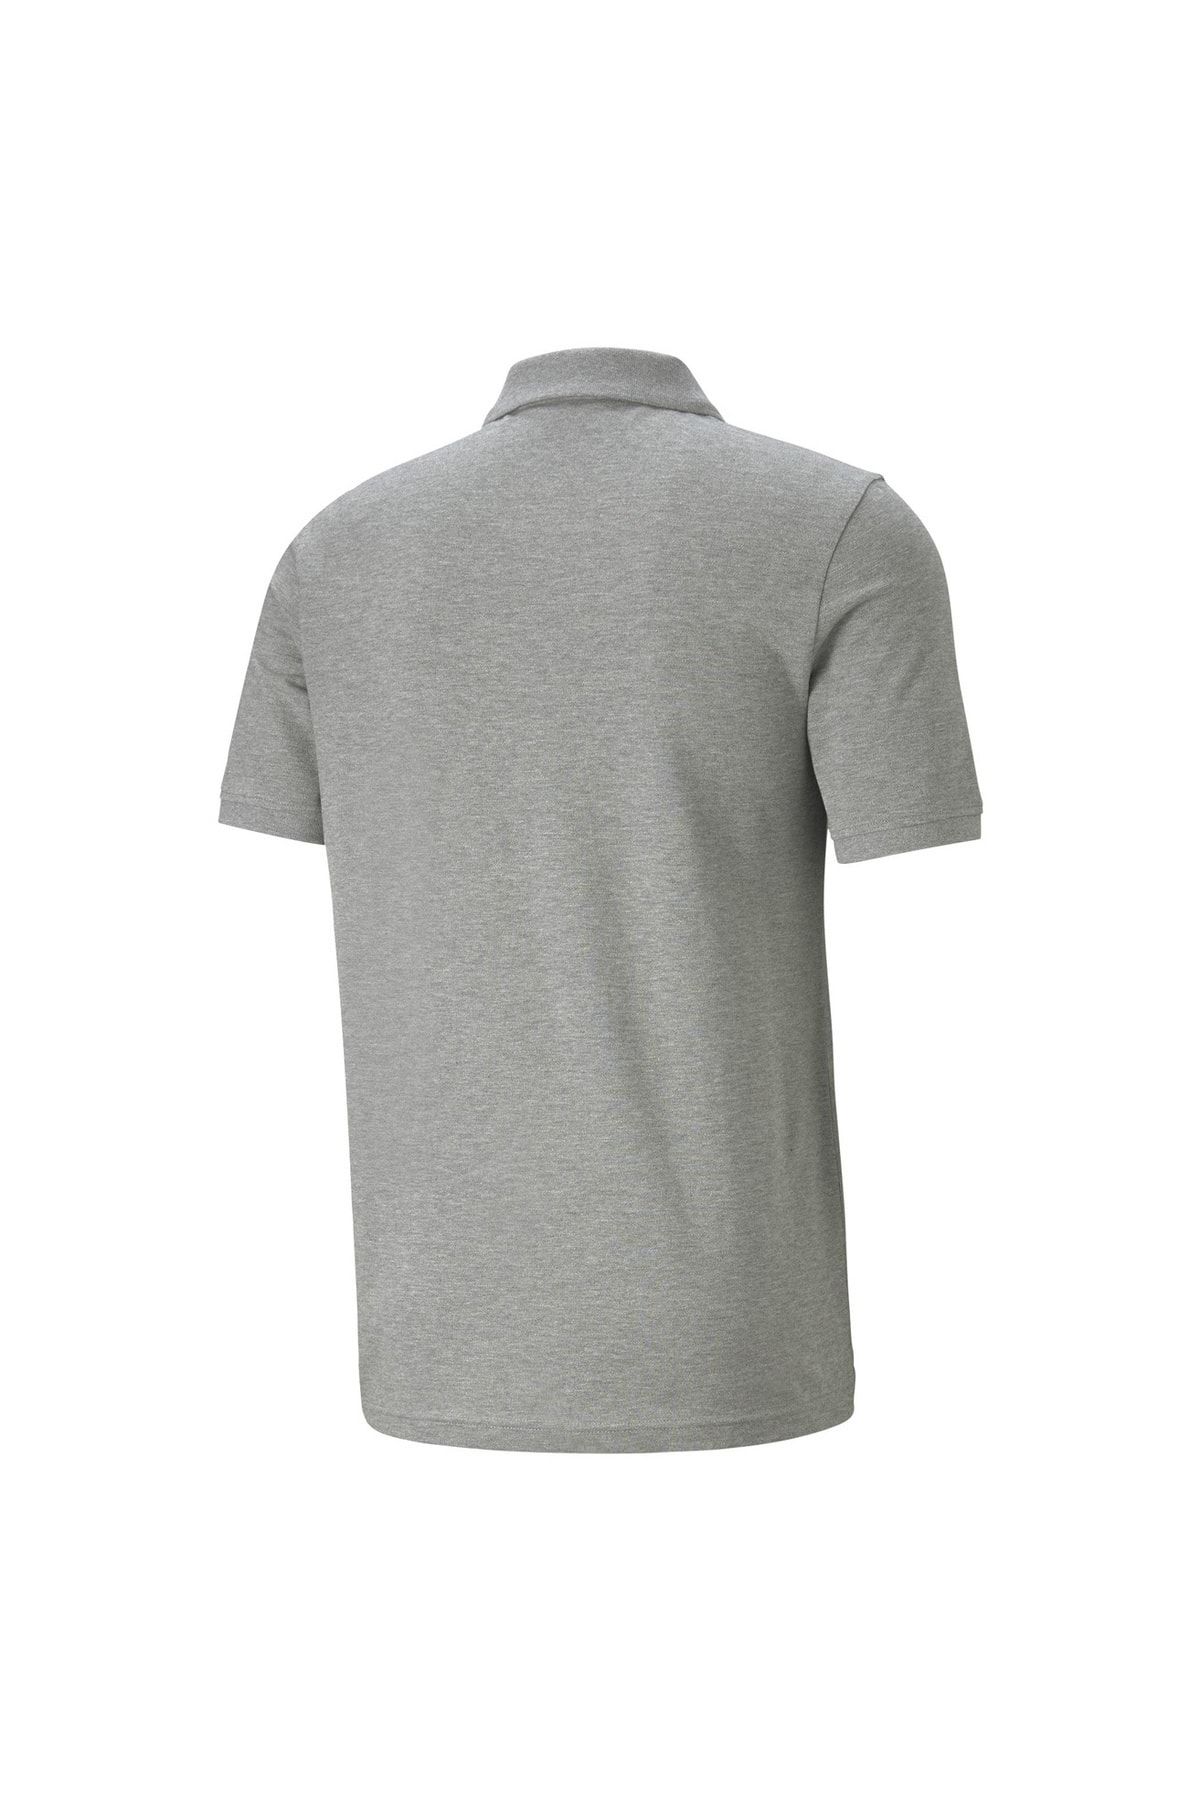 - Neck Men\'s Pique Plain Round Medium ESS Puma Polo T-Shirt 58667403 Gray Trendyol G